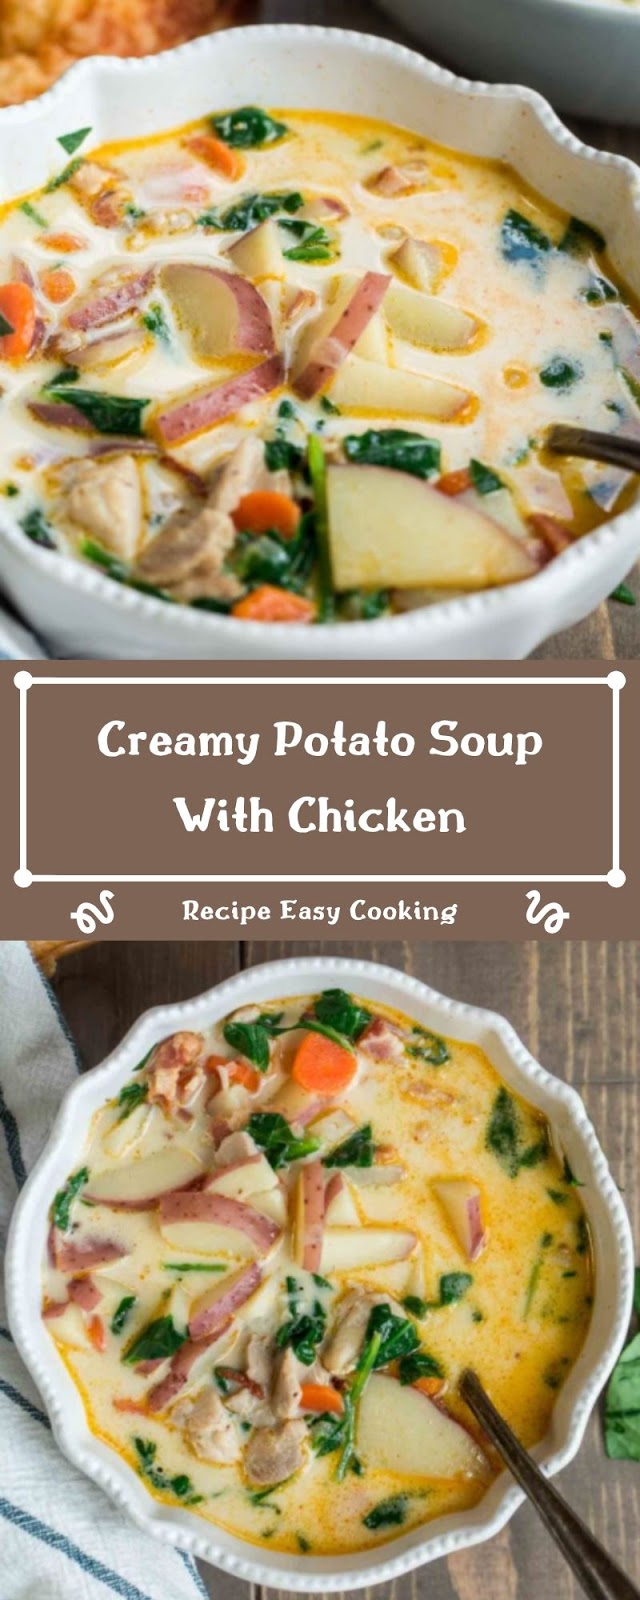 Creamy Potato Soup With Chicken